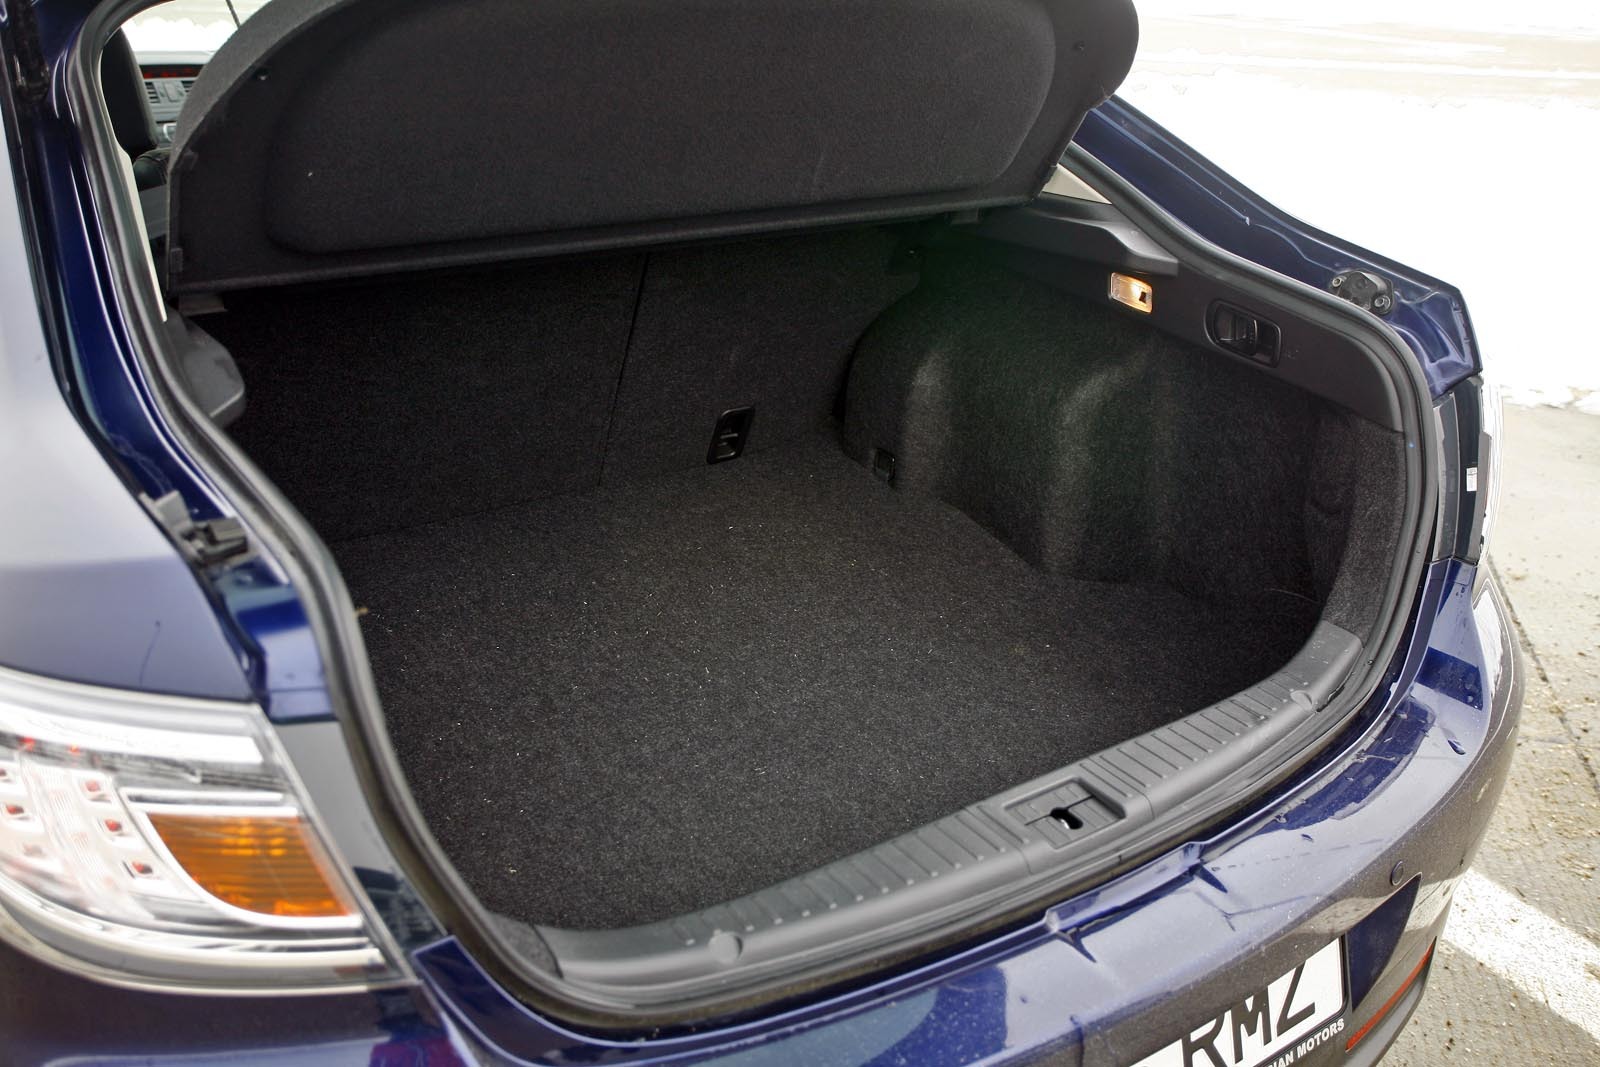 Mazda6 era in versiunea cu hayon, ceea ce inseamna un mare plus la acces si modularitate